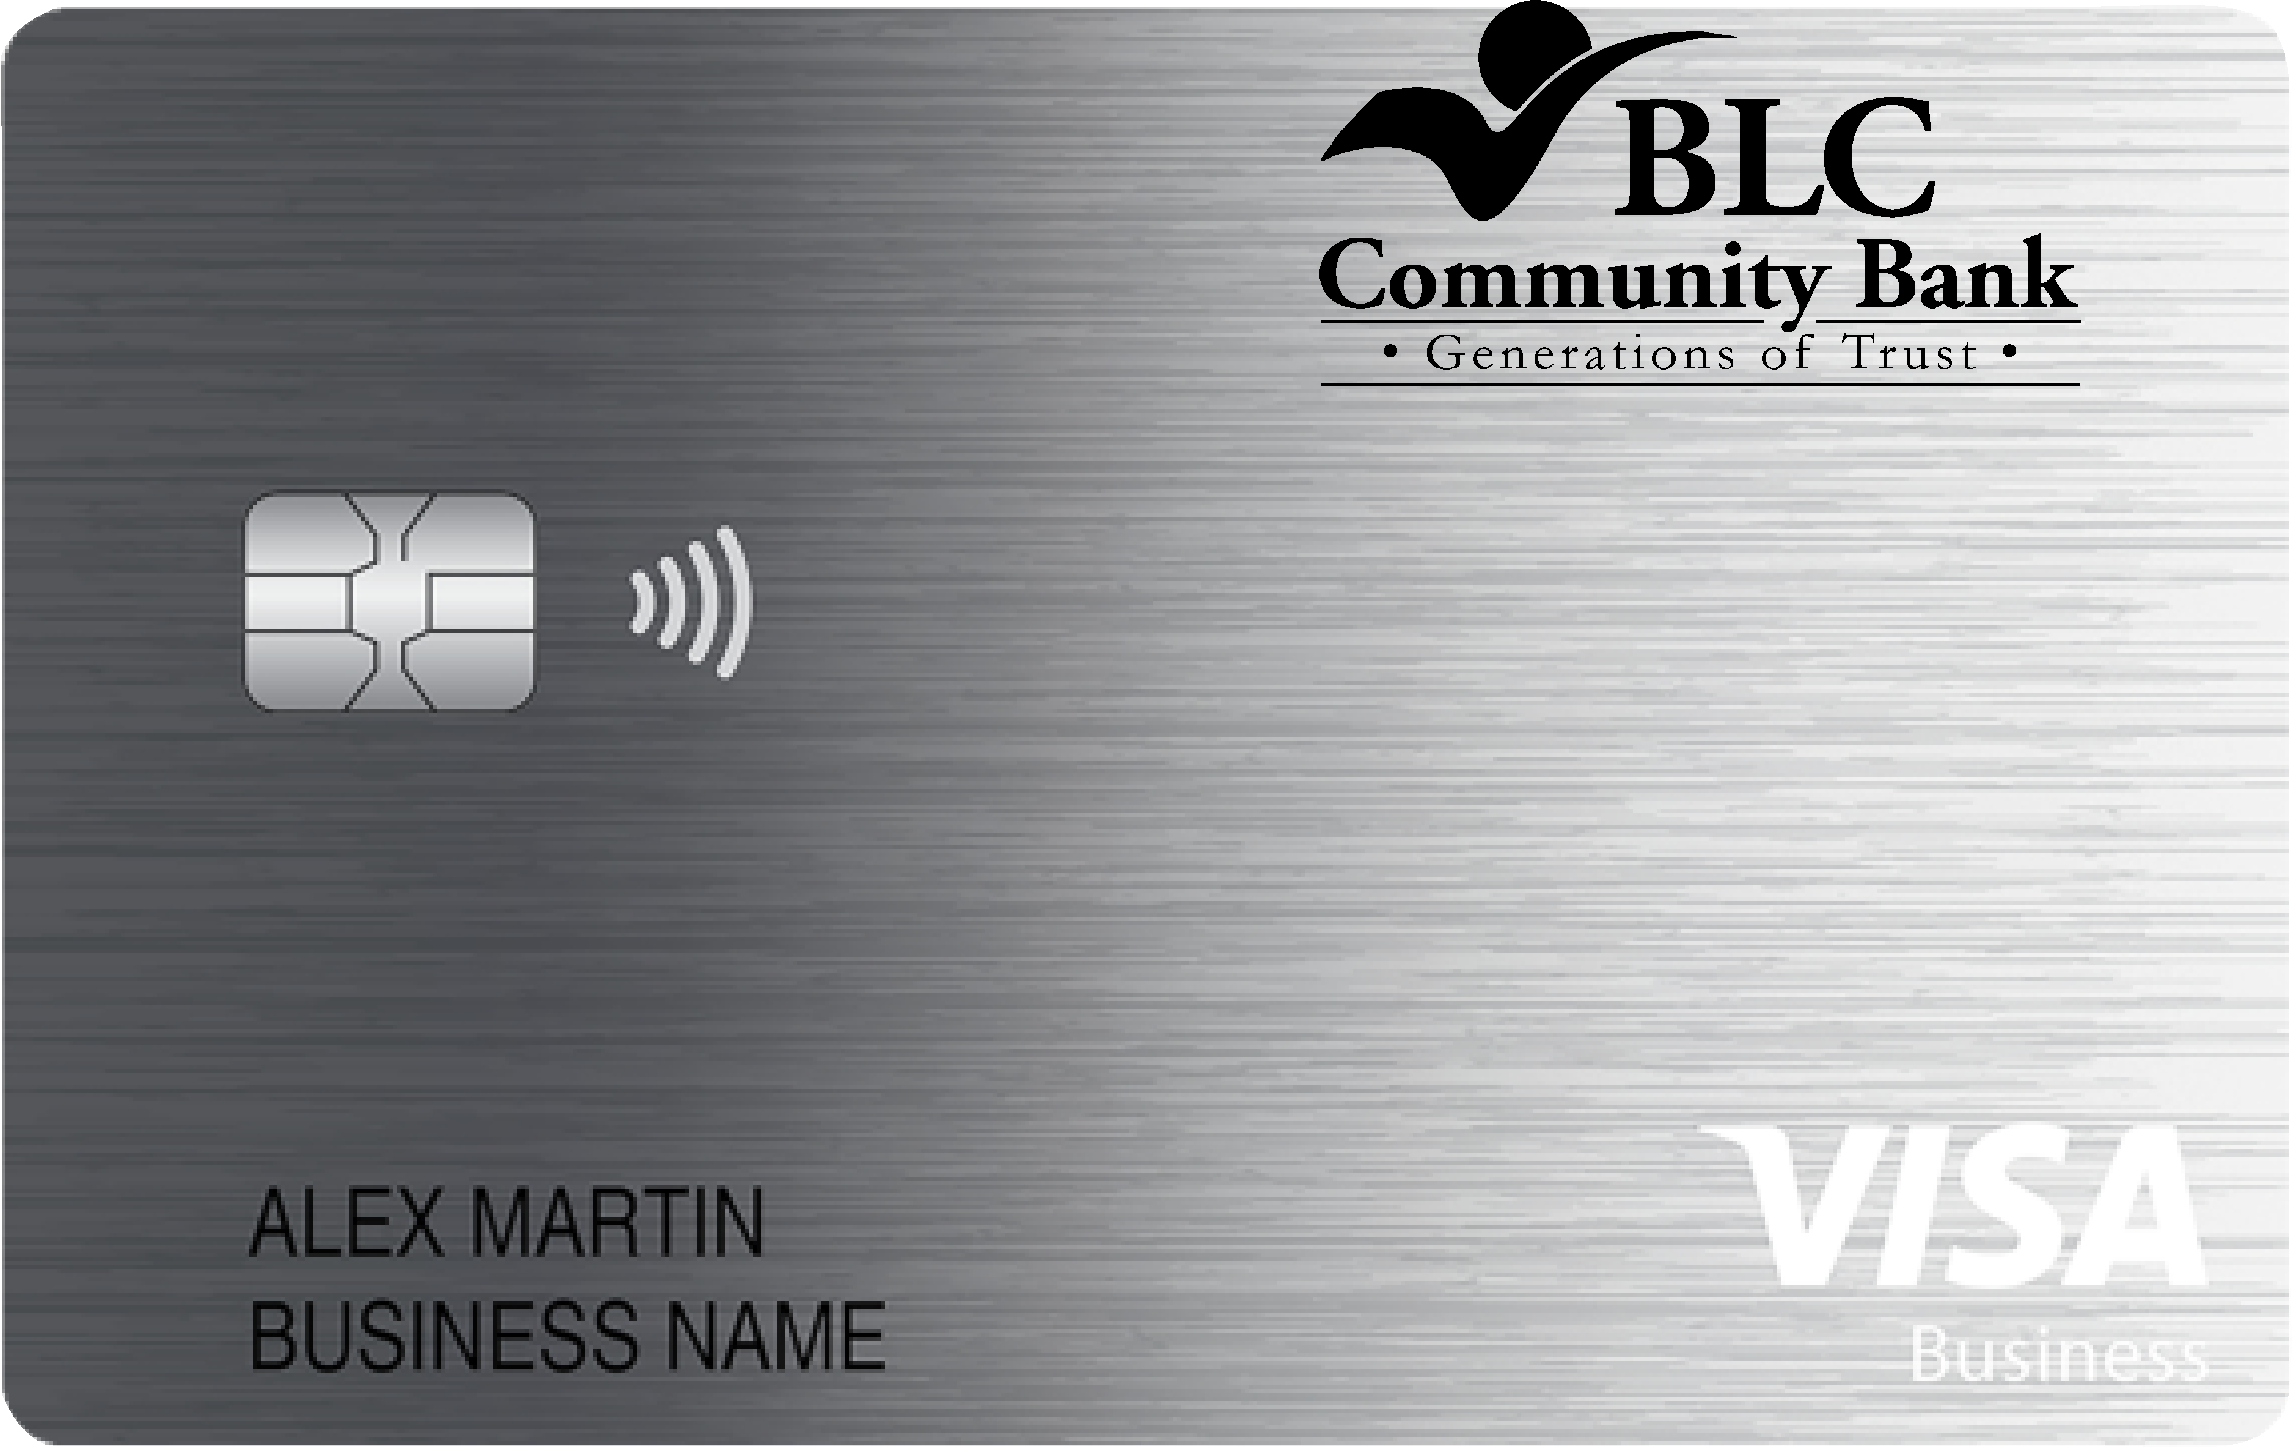 BLC Community Bank Business Cash Preferred Card